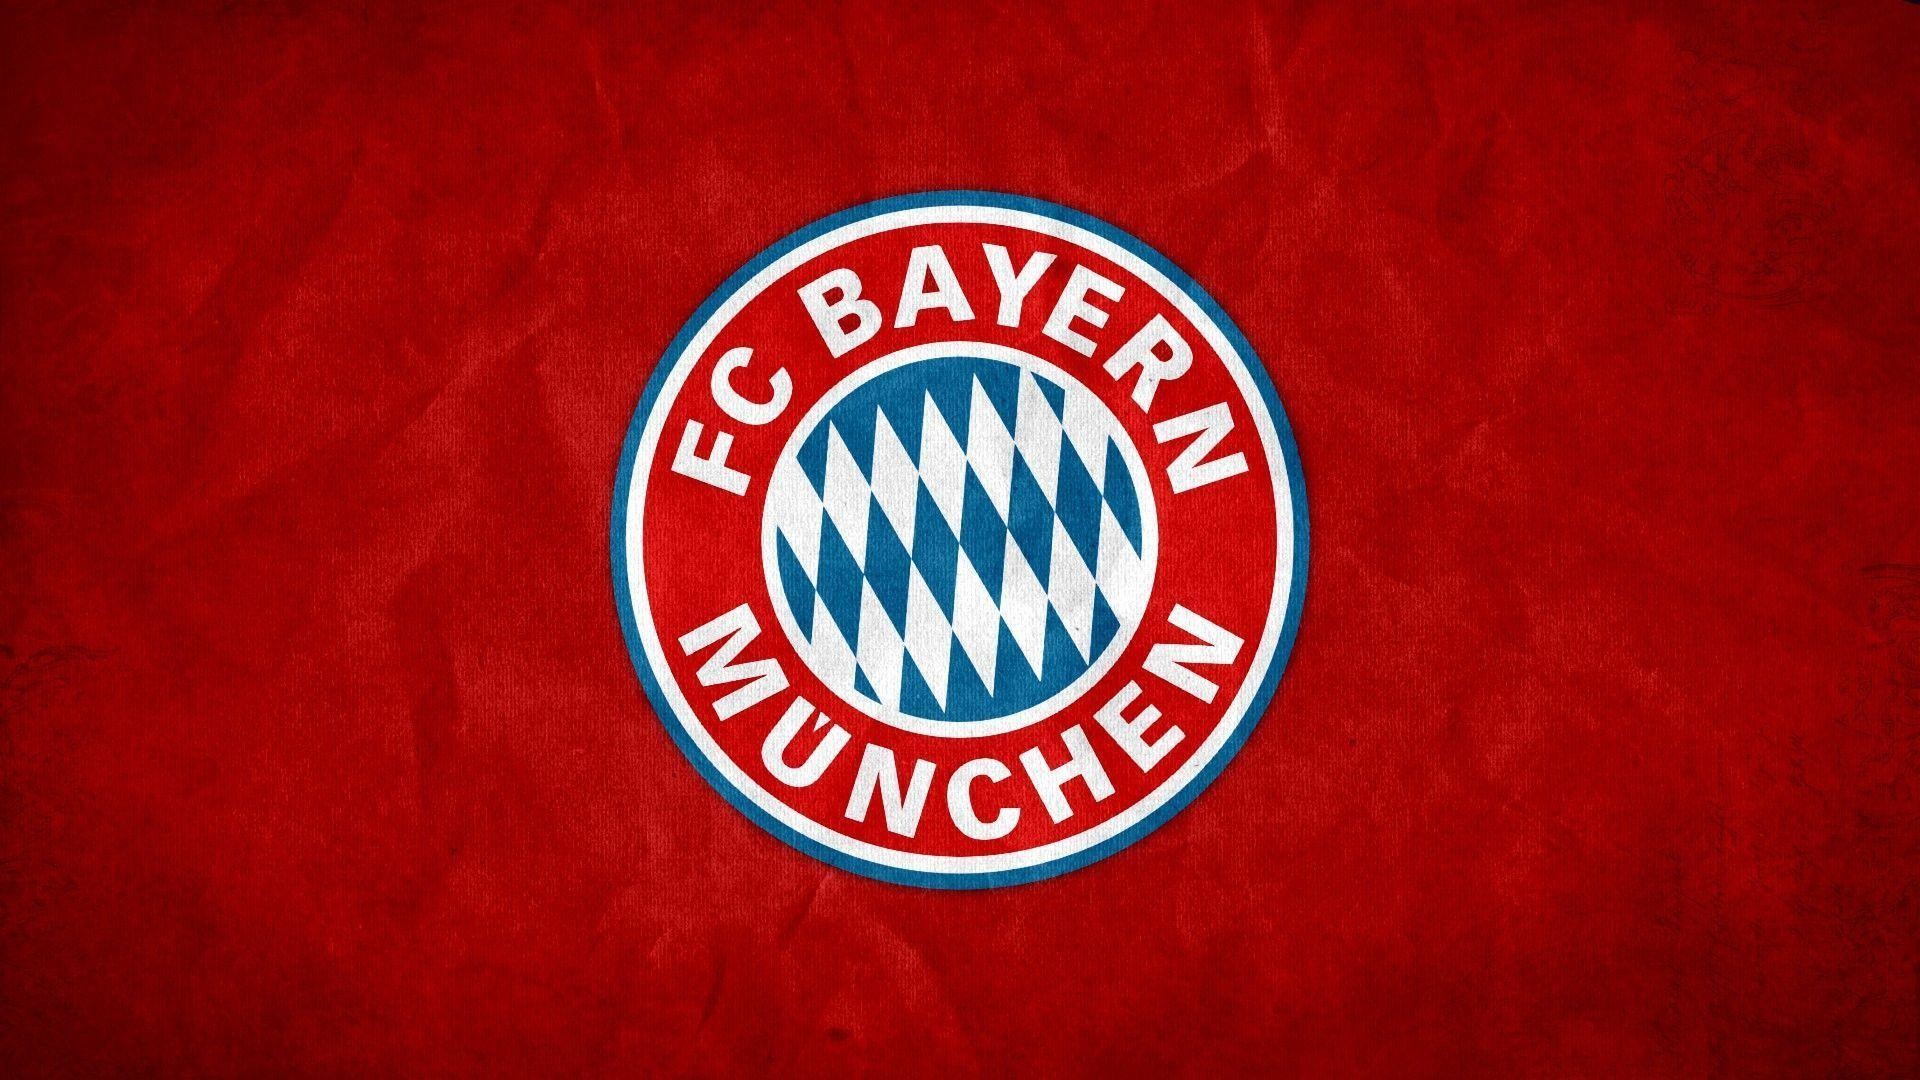 1920x1080 Bayern Munchen football logo download free backgrounds - Football .